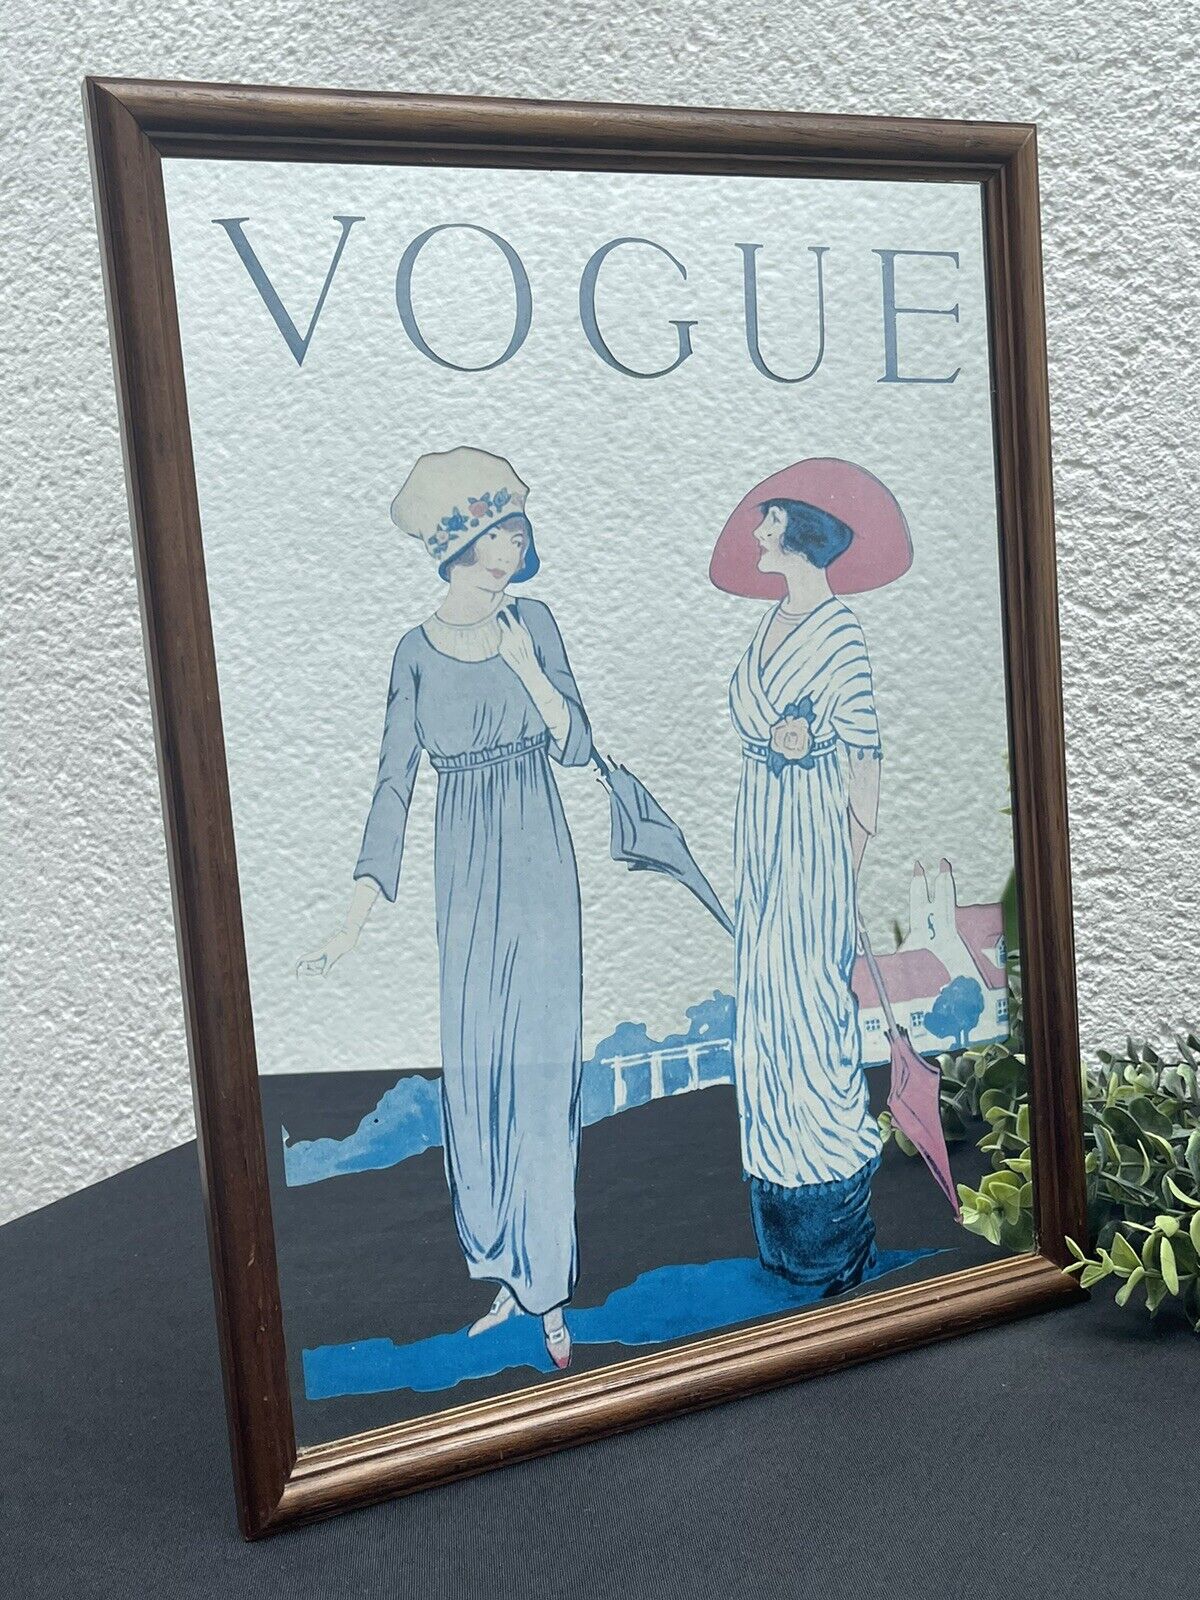 Antique Vintage Vogue Advertising Framed Mirror by Helen Dryden Art Deco Style